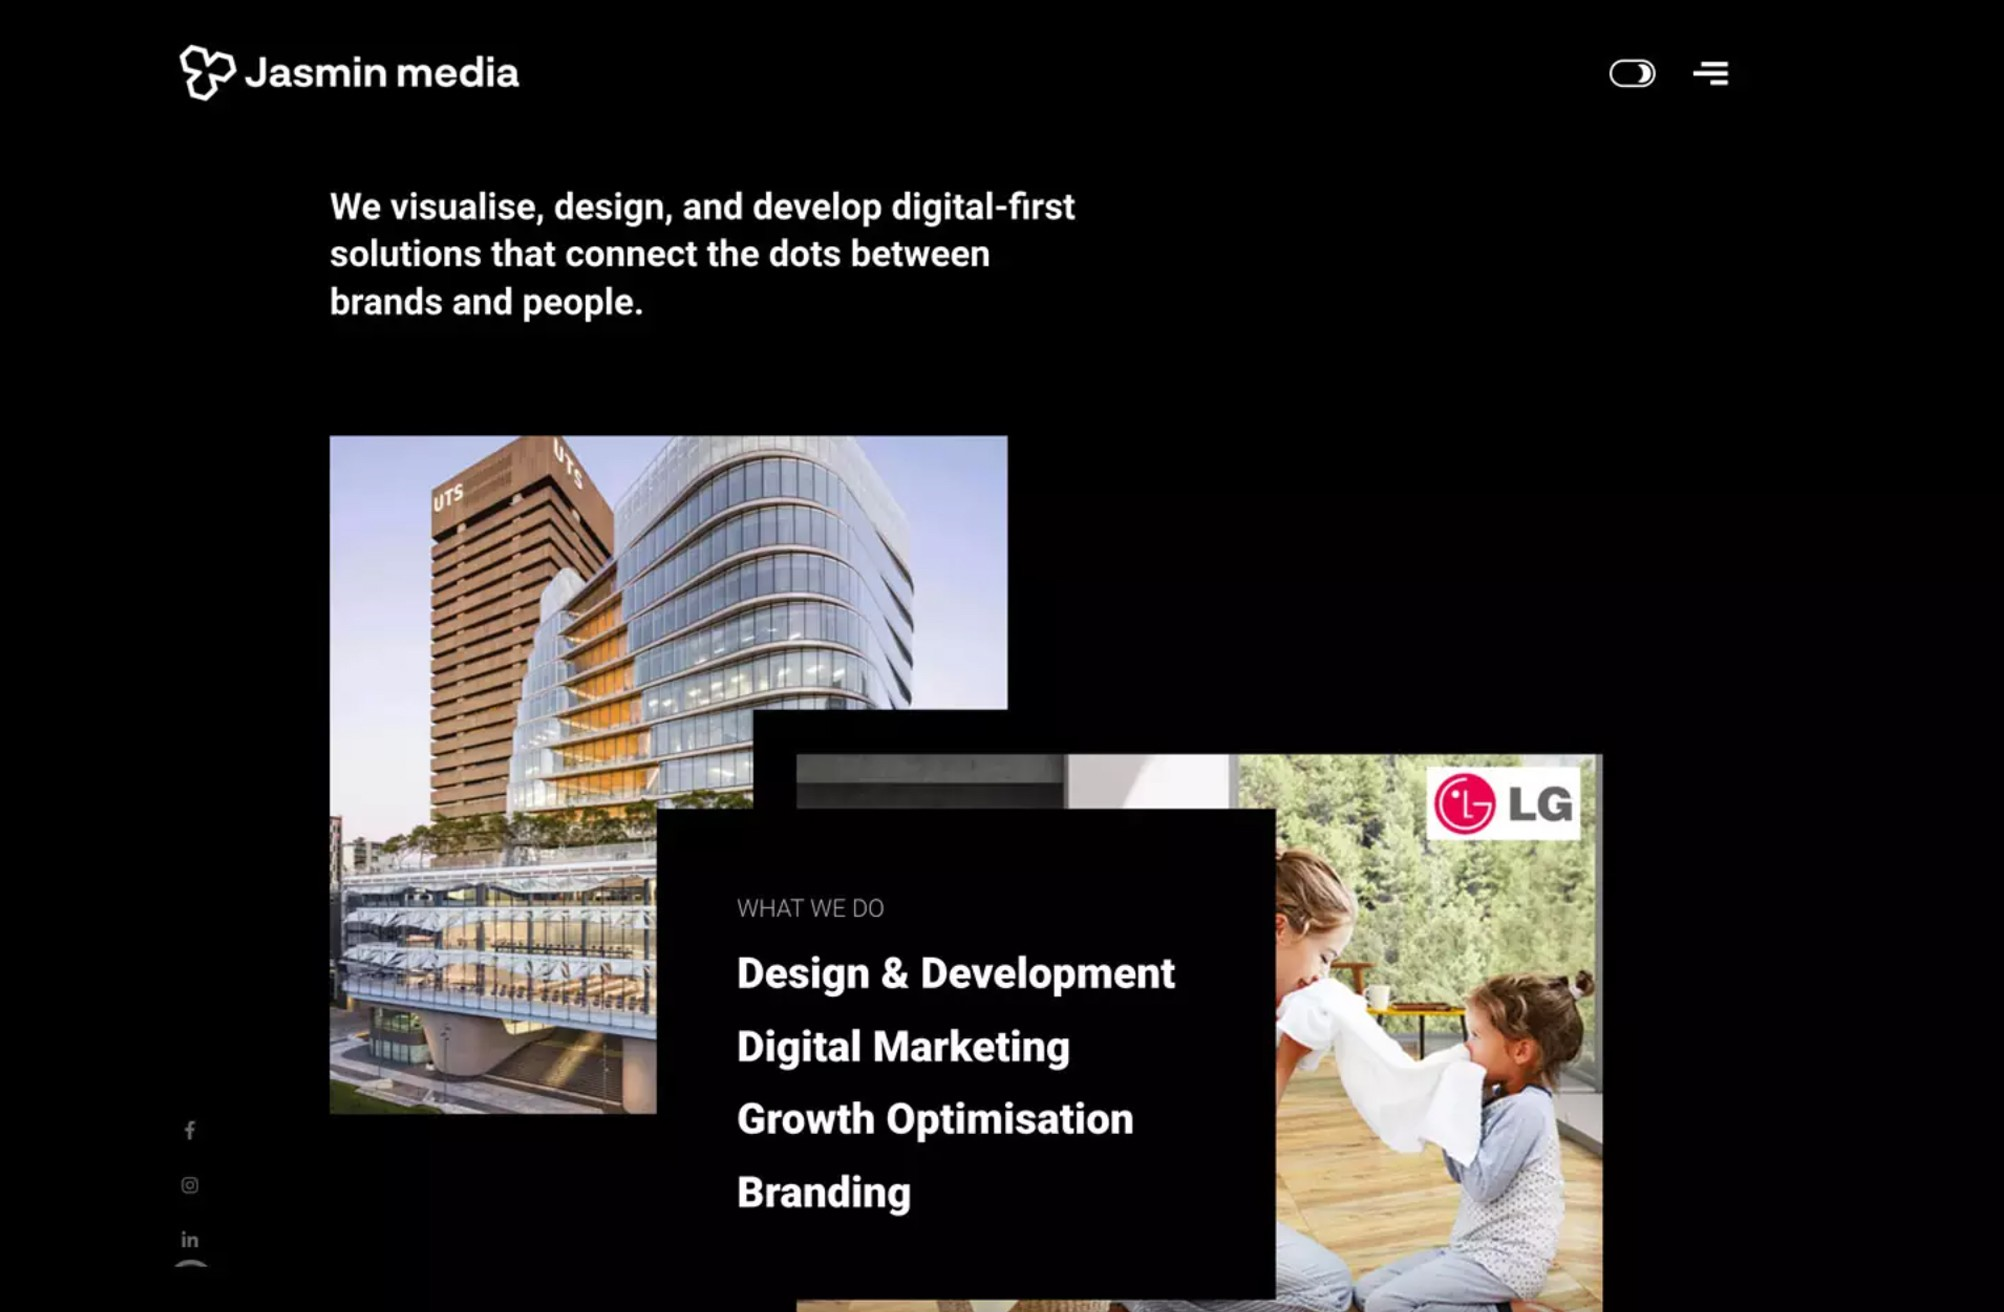 Jasmin Media - We visualise, design, and develop digital-first solutions